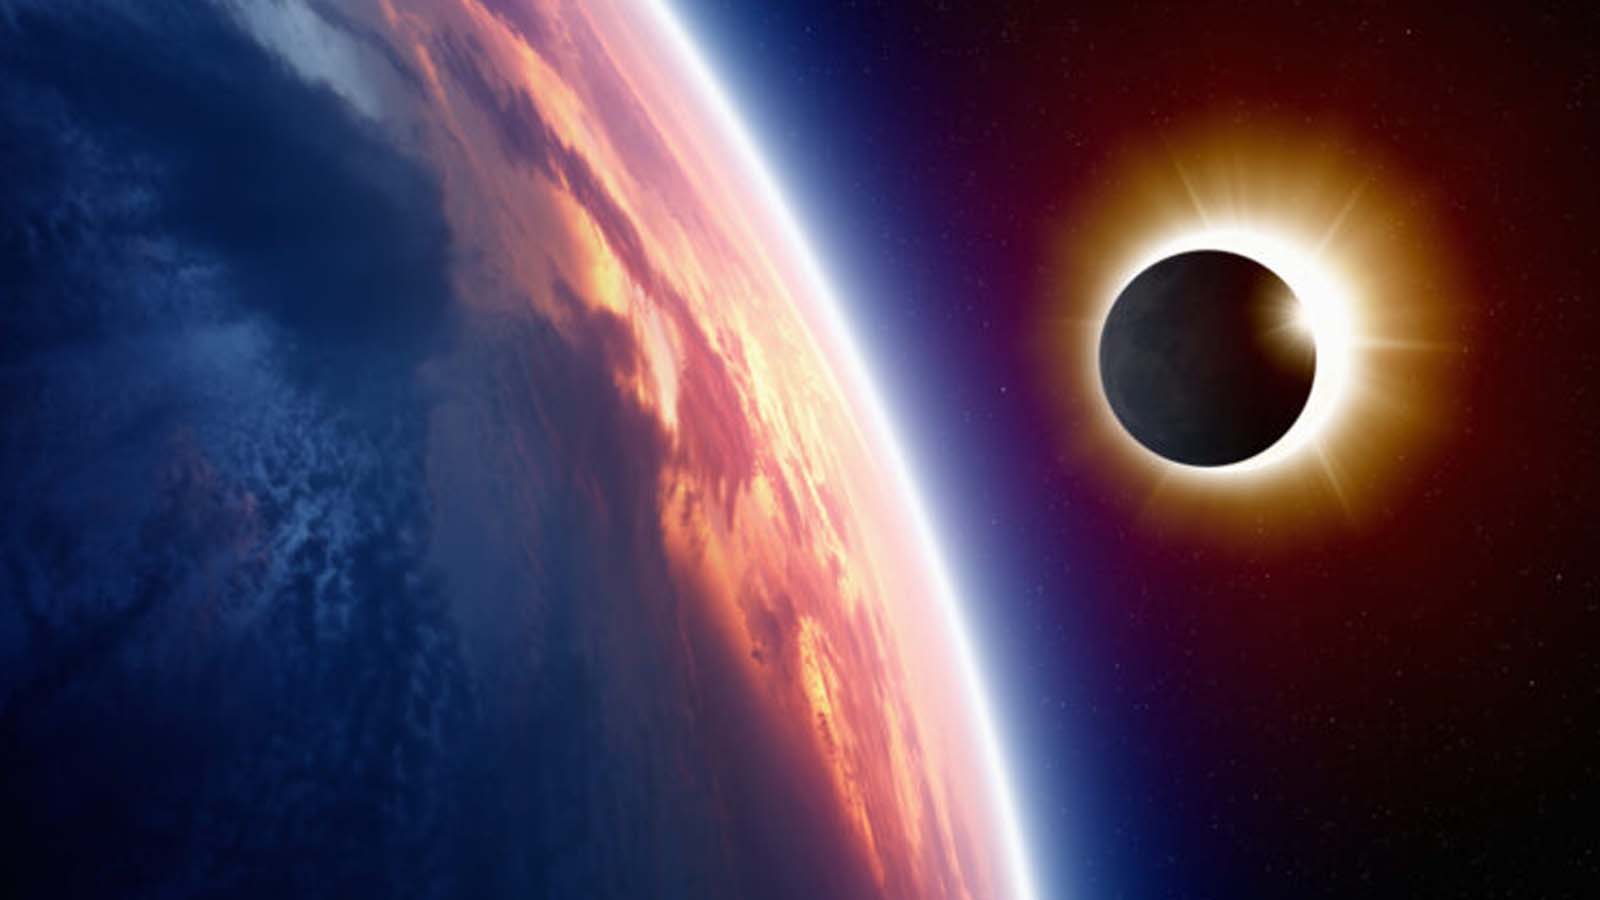 Preparati alla bellezza unica di un’eclissi solare eccezionale che catturerà l'attenzione di milioni di spettatori 